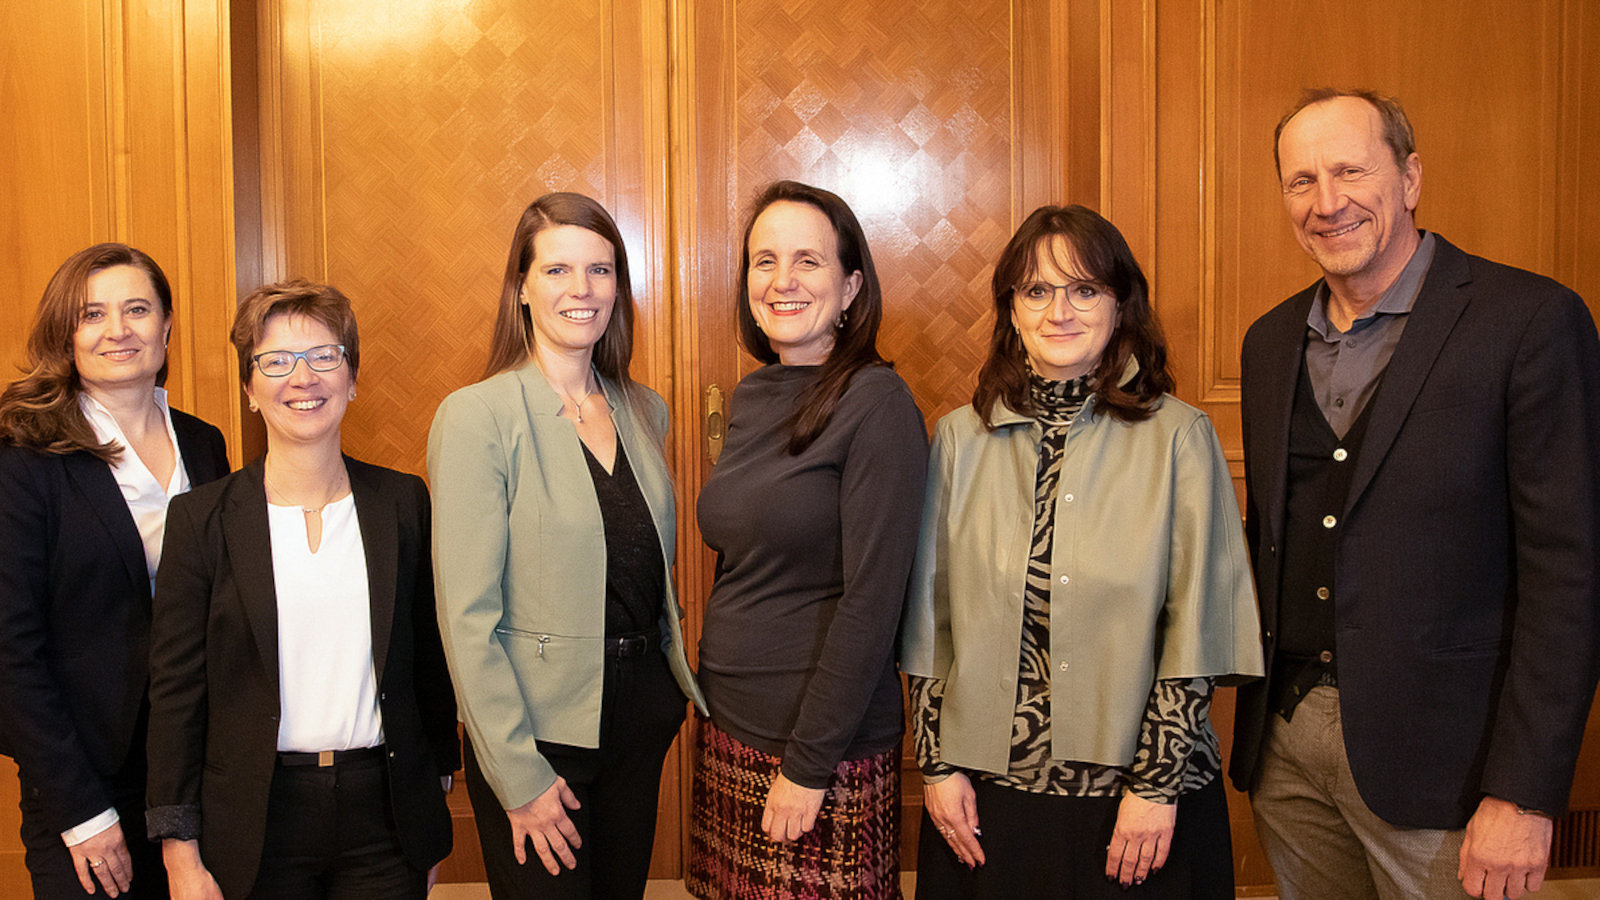 from left: Kerstin Hainle (vice chairwoman of unifreunde), Claudia Schilling (Senator for Science and Ports), Ann-Kathrin Rohde, Sabine Doff, Maren Petersen (vice principal), Carl Berninghausen (Berninghausen Foundation).